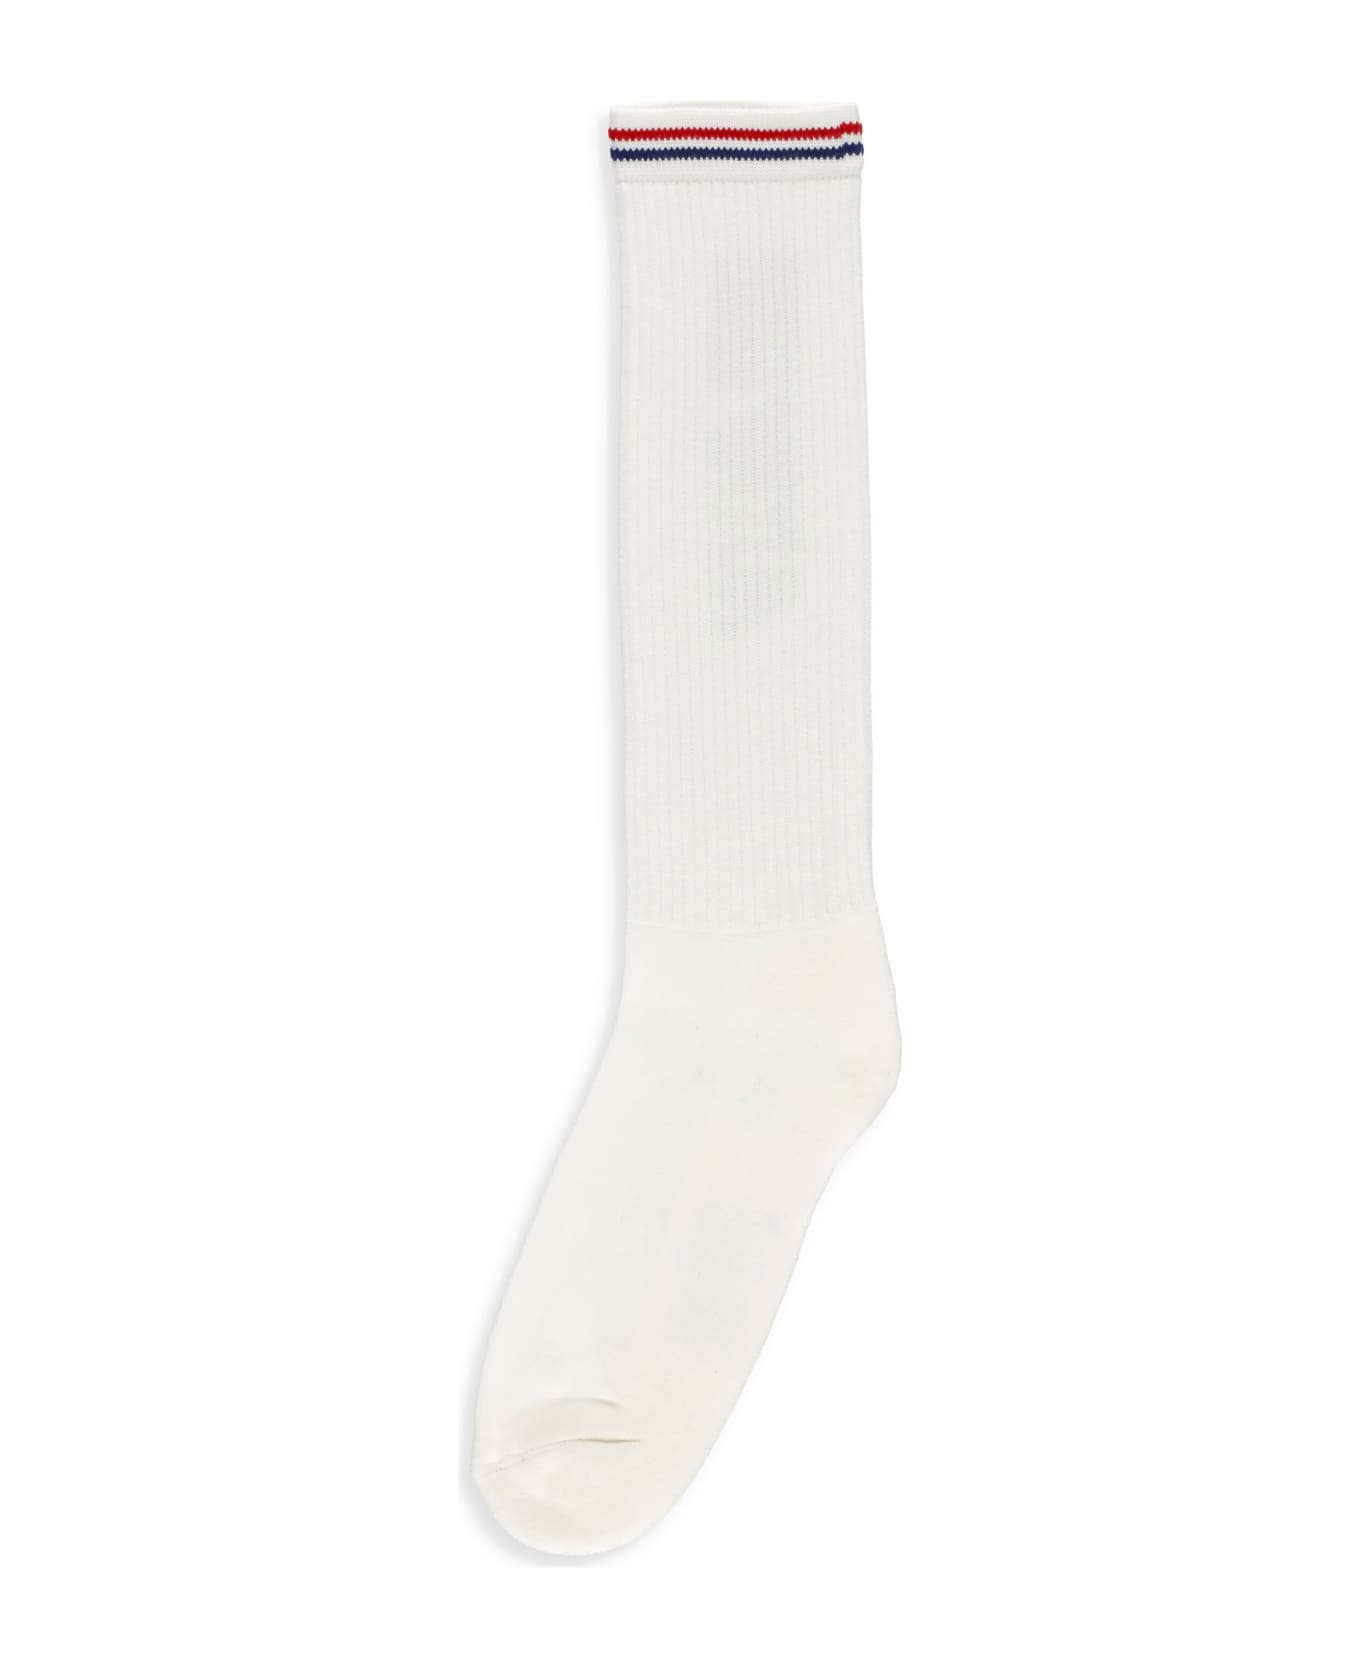 Autry Cotton Long Socks - Wht/flag